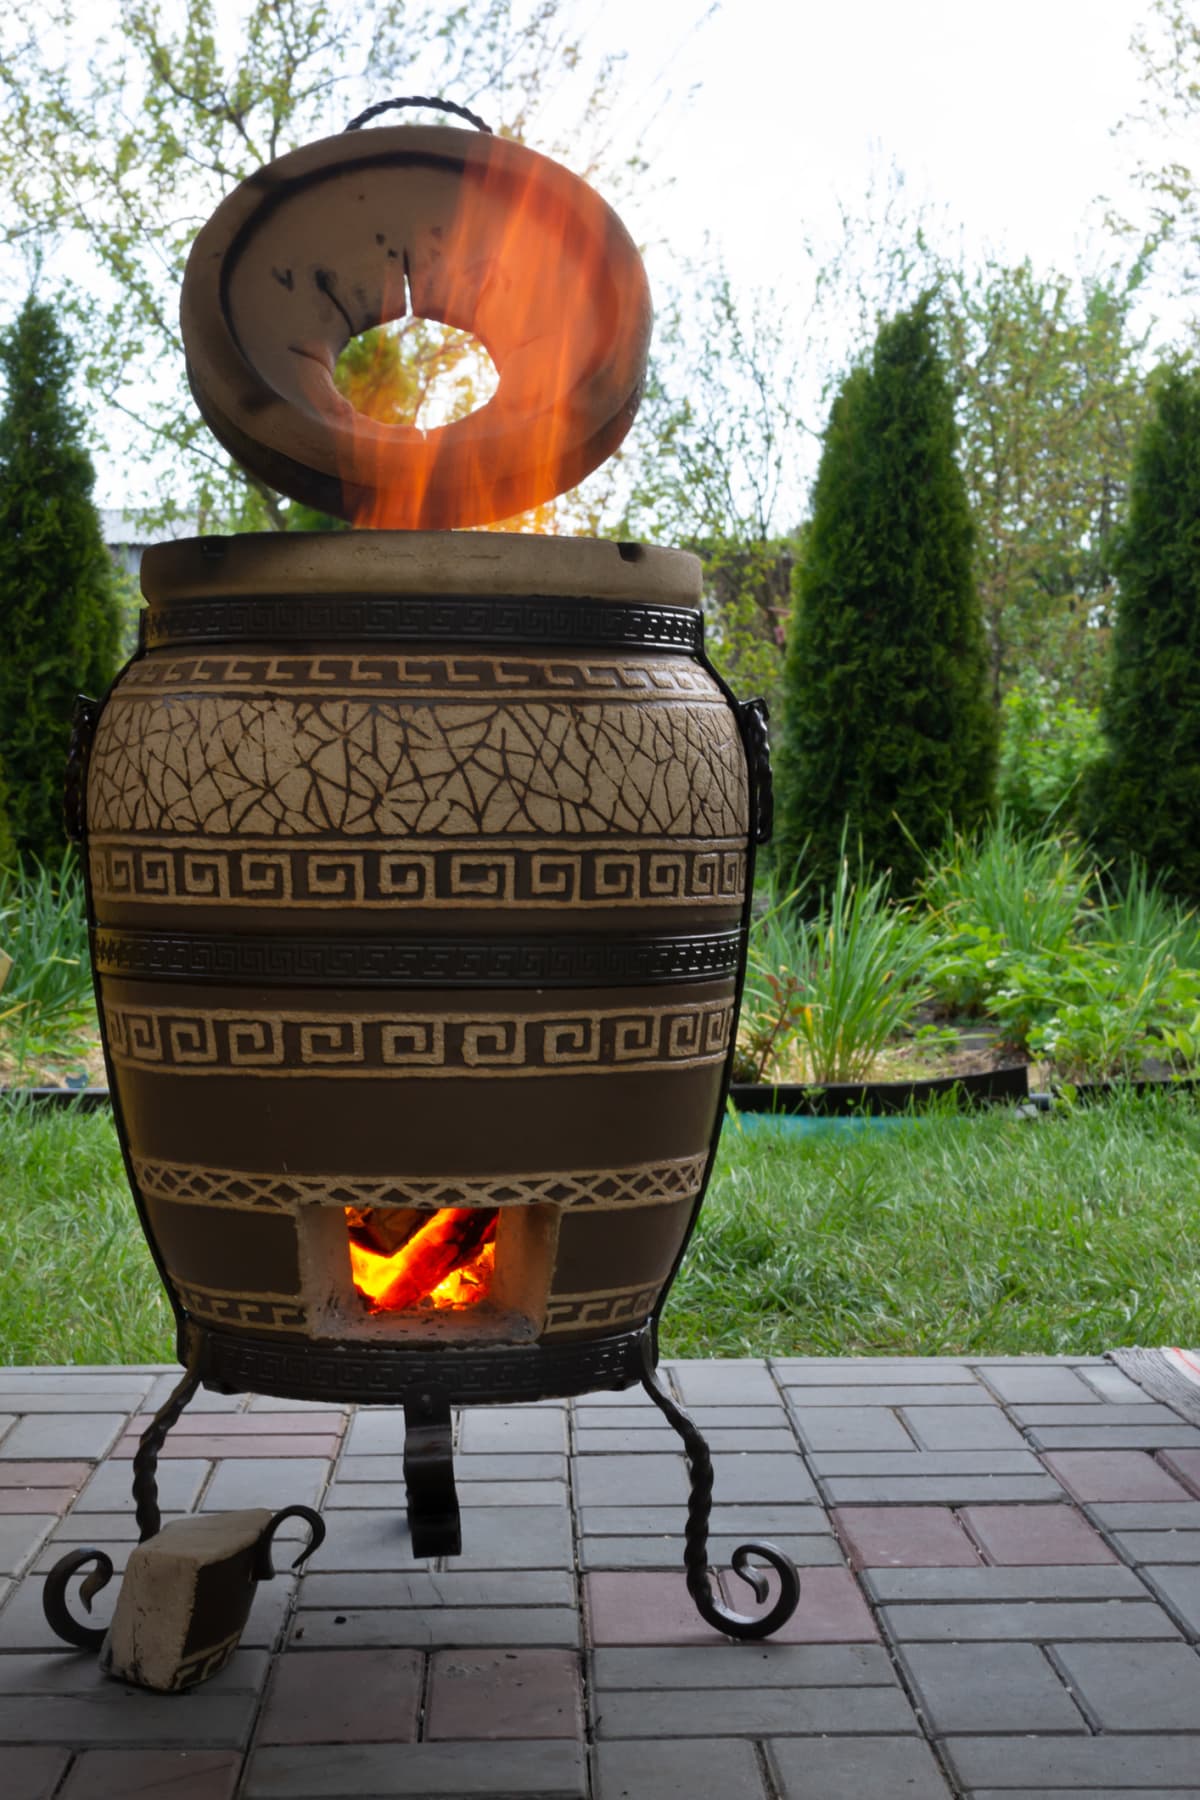 Fire in the tandoor. Preheat the tandoor before preparing the kebab.